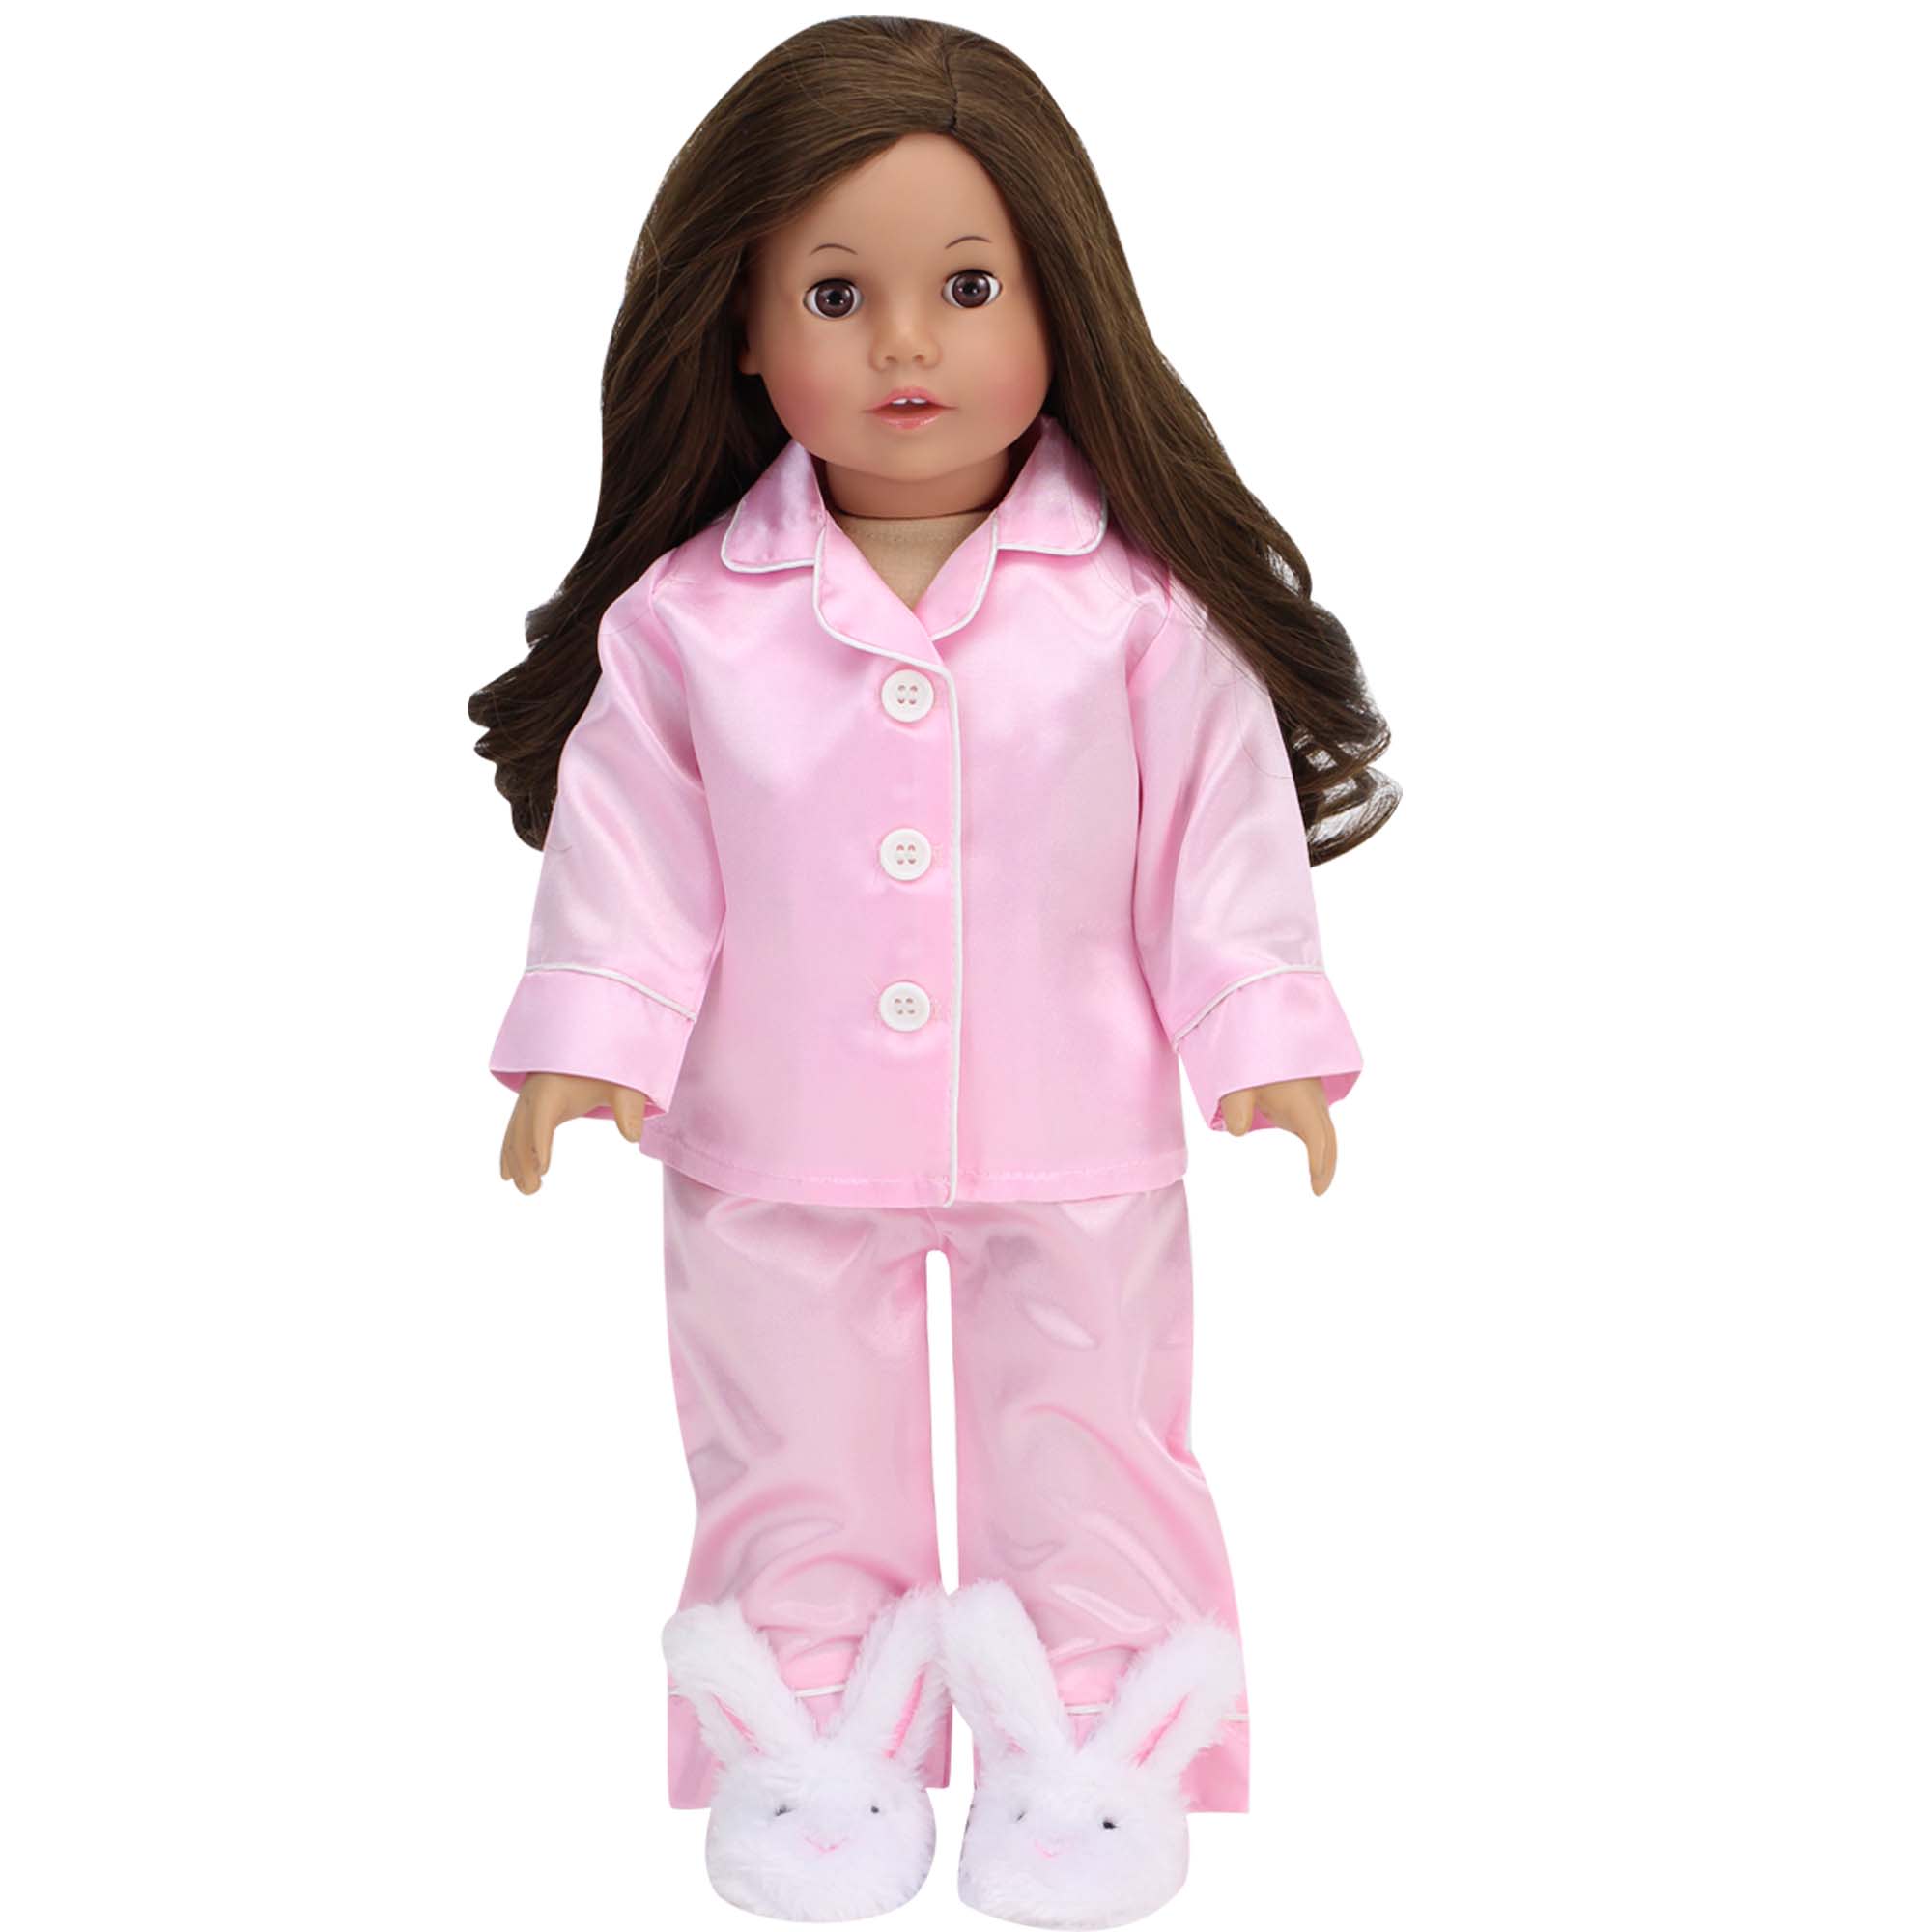 Sophia's Satin Pajama Top & Bottom Plus Bunny Slippers for 18" Dolls, Pink